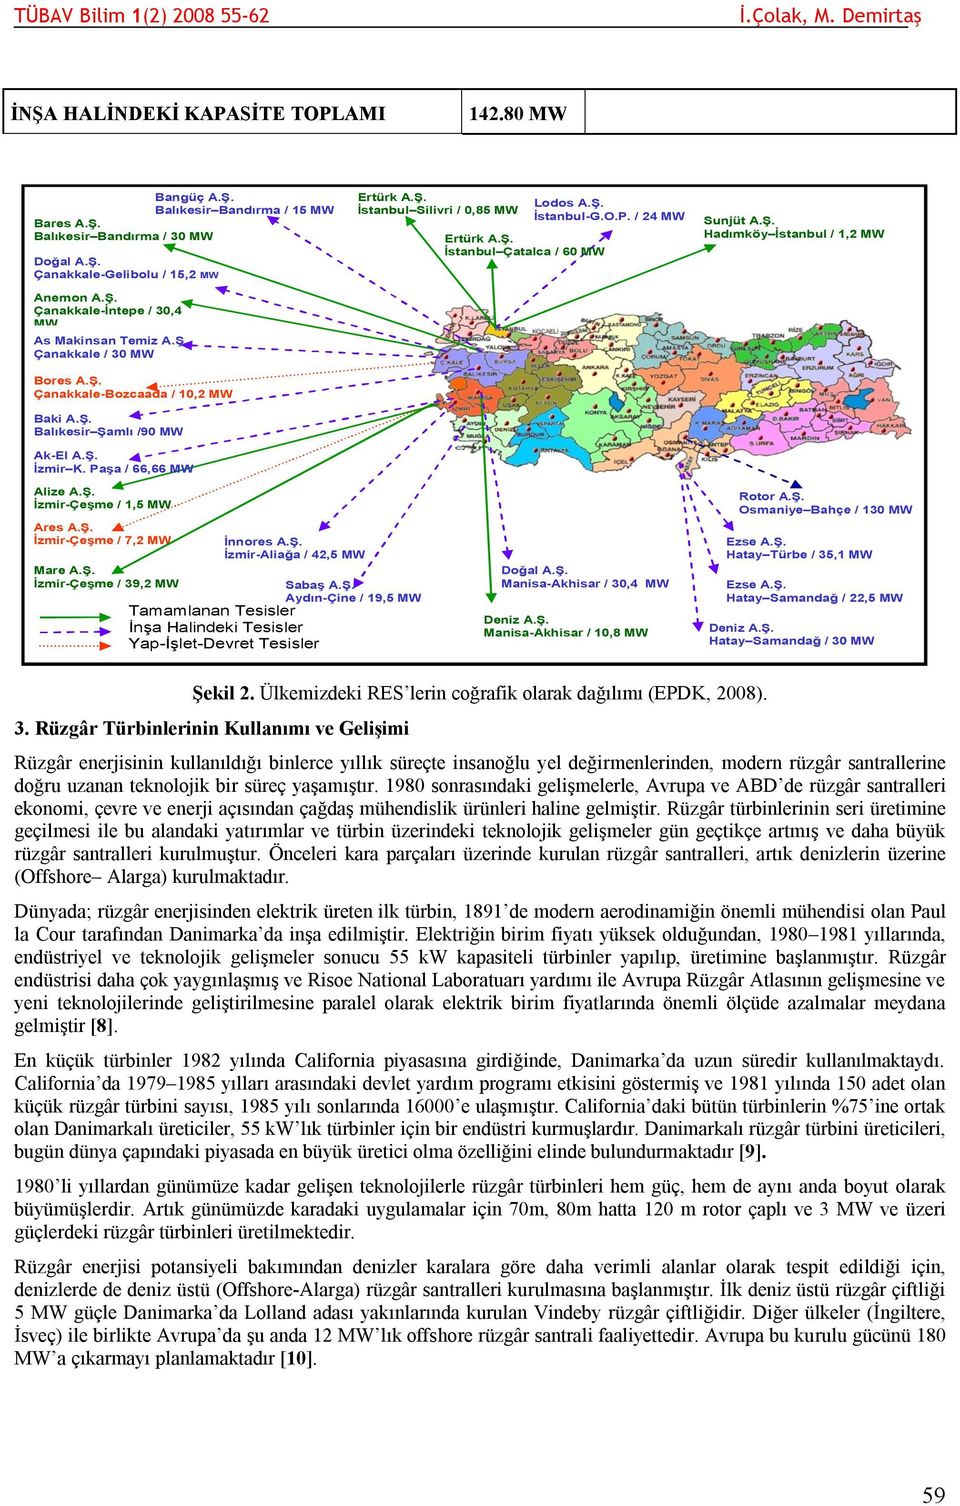 Ş. İstanbul-G.O.P. / 24 MW Sunjüt A.Ş. Hadımköy İstanbul / 1,2 MW Alize A.Ş. İzmir-Çeşme / 1,5 MW Ares A.Ş. İzmir-Çeşme / 7,2 MW Mare A.Ş. İzmir-Çeşme / 39,2 MW İnnores A.Ş. İzmir-Aliağa / 42,5 MW Tamamlanan Tesisler İnşa Halindeki Tesisler Yap-İşlet-Devret Tesisler Sabaş A.